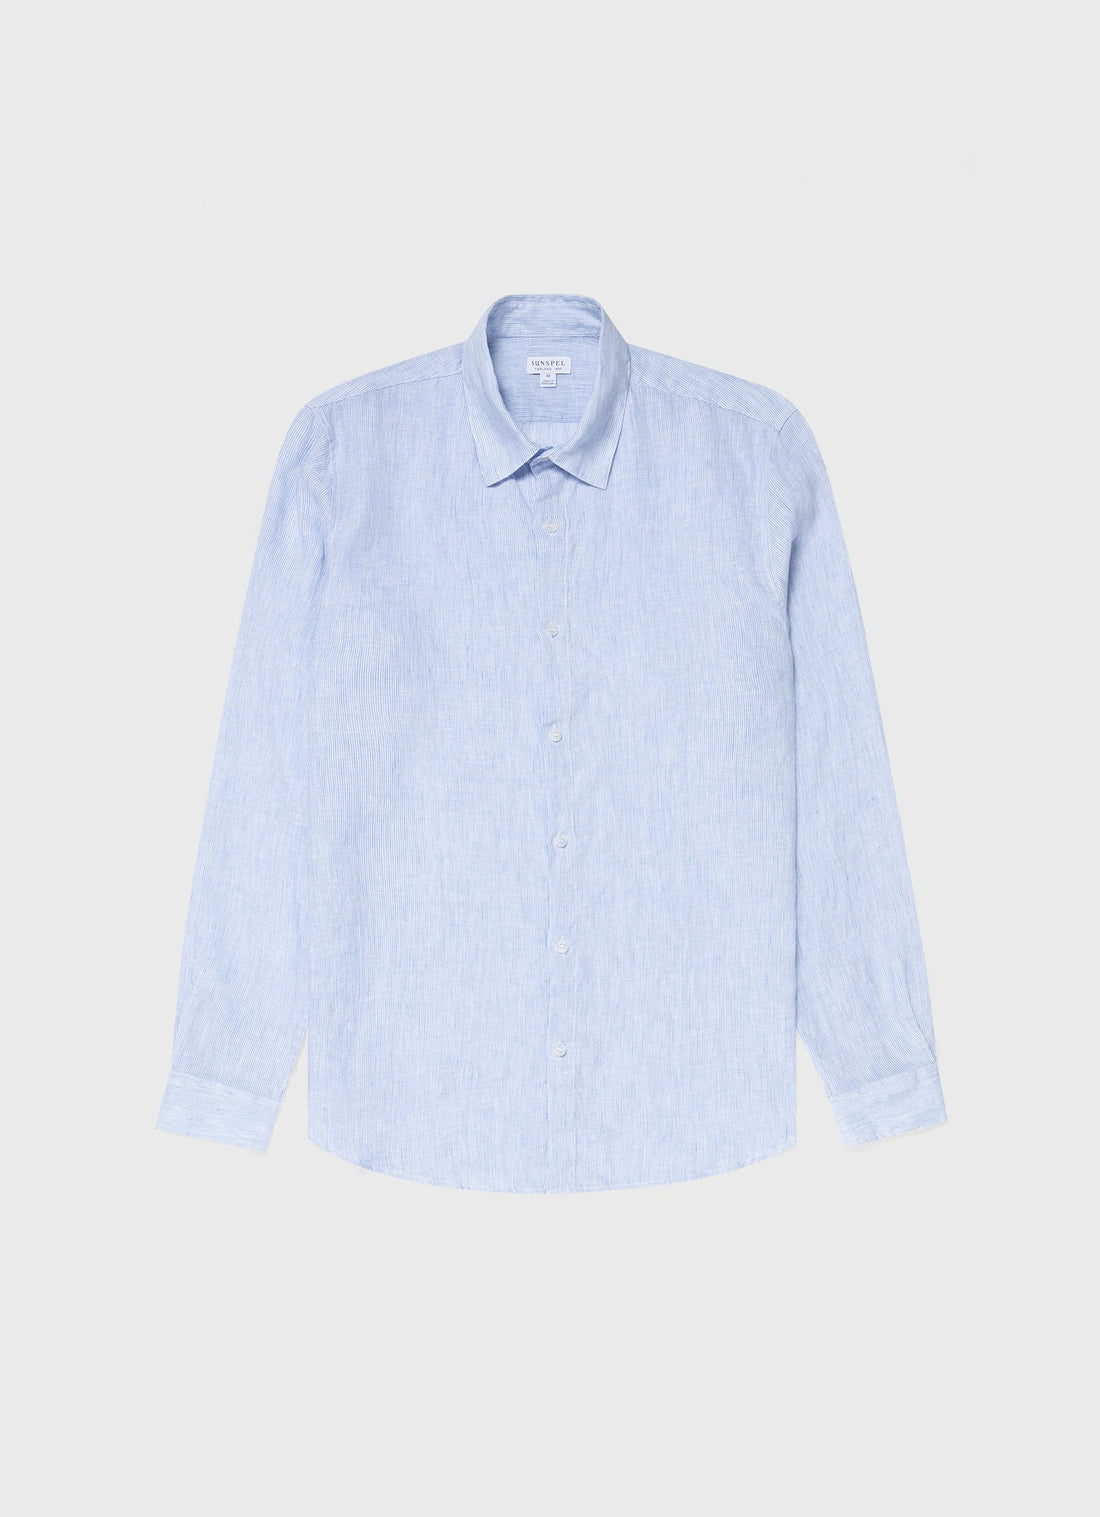 Men's Linen Long Sleeve Shirt in Cool Blue Micro Stripe